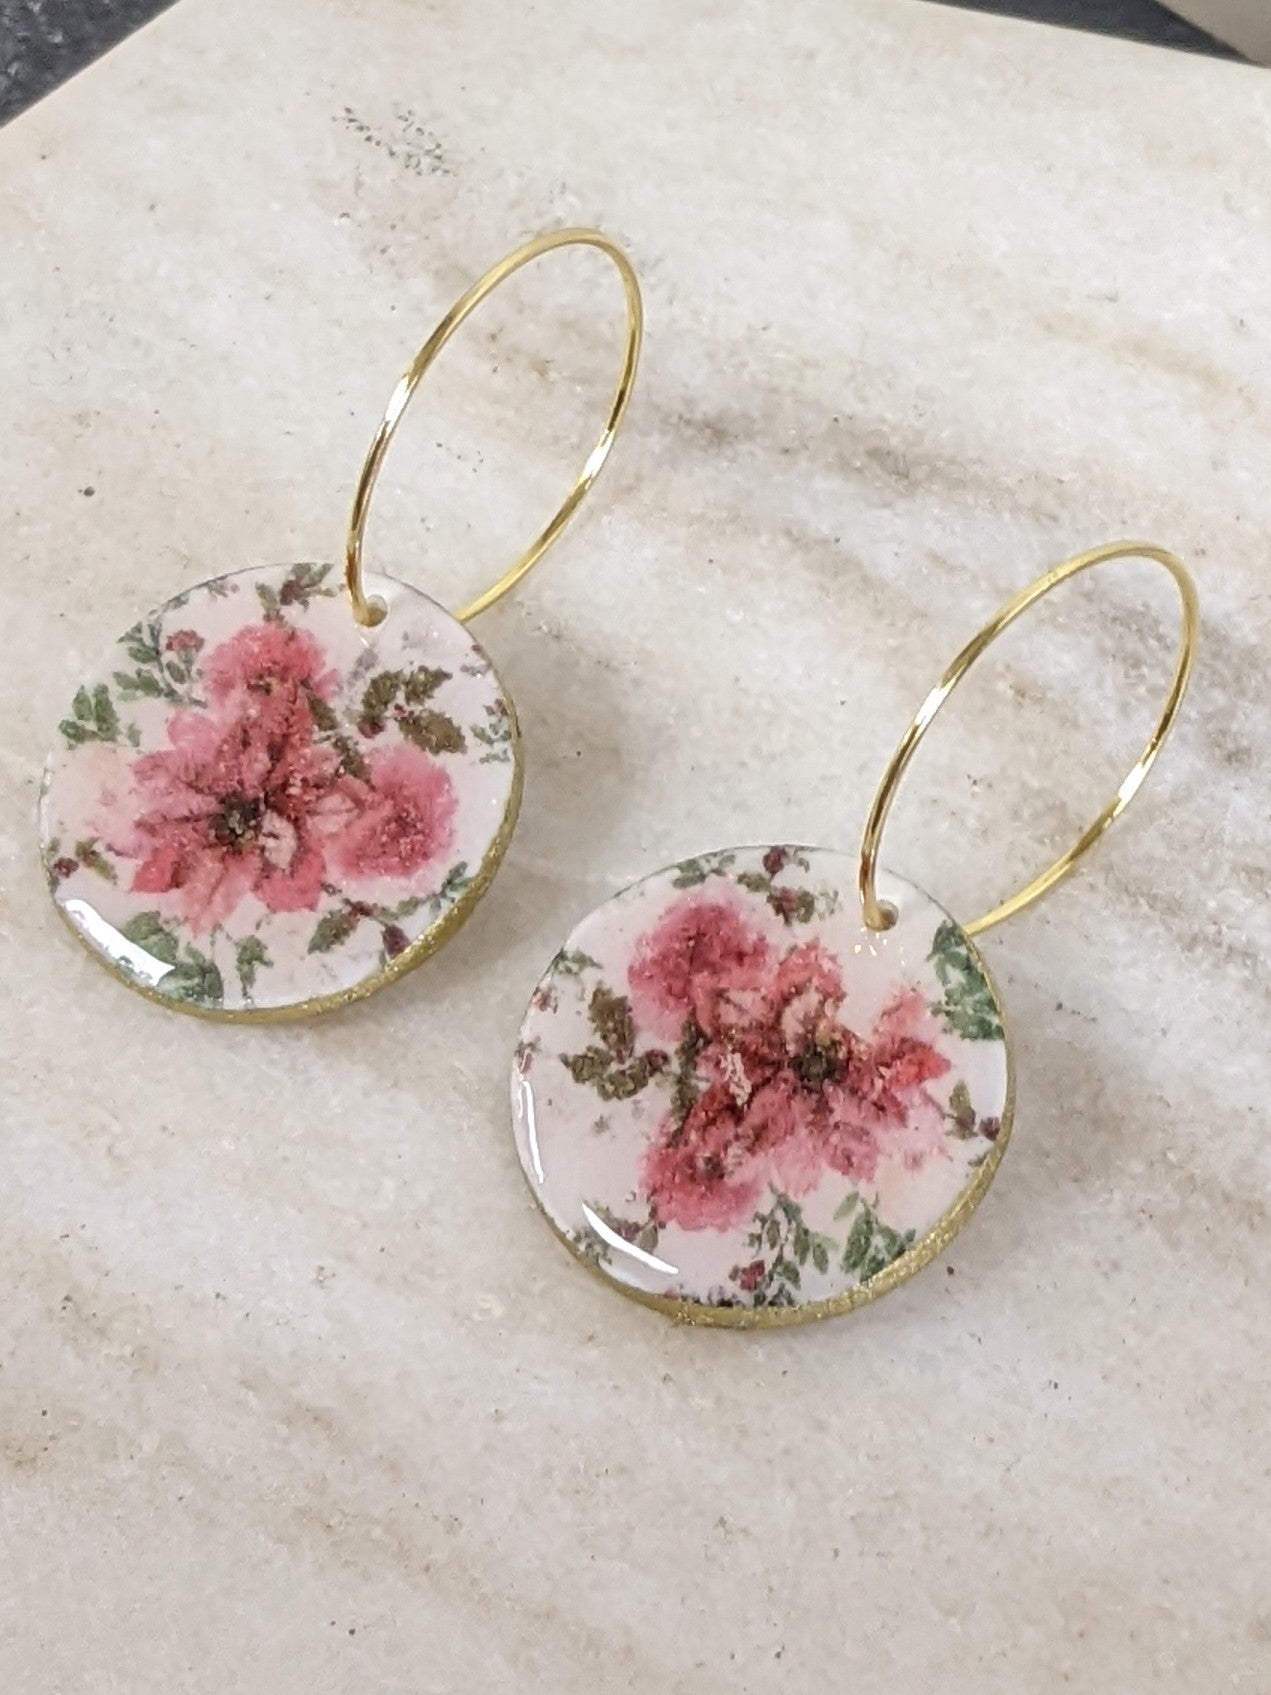 Handmade Clay Earrings - Floral Dangle